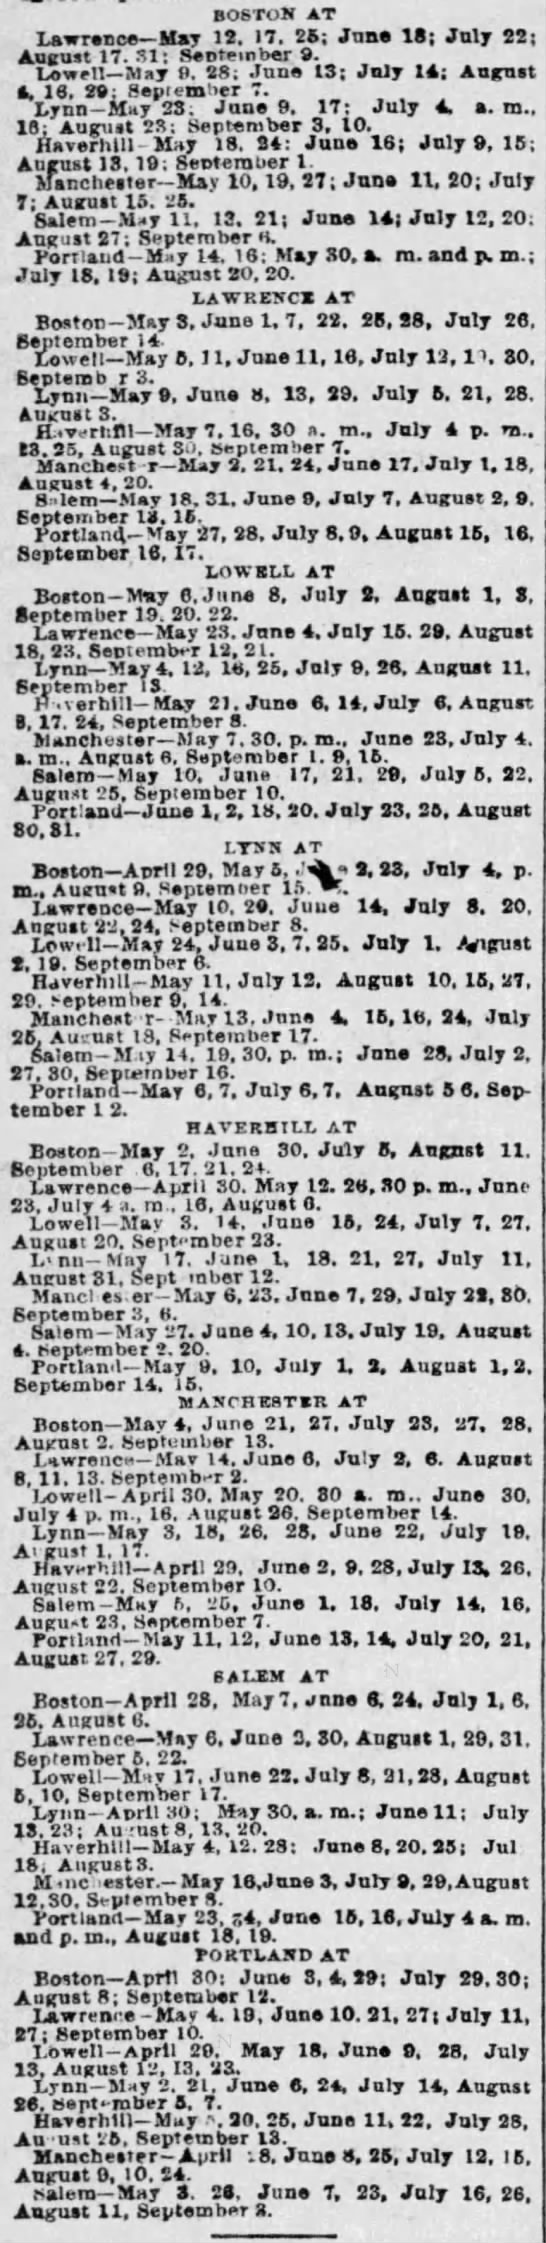 1887 New England League schedule - 